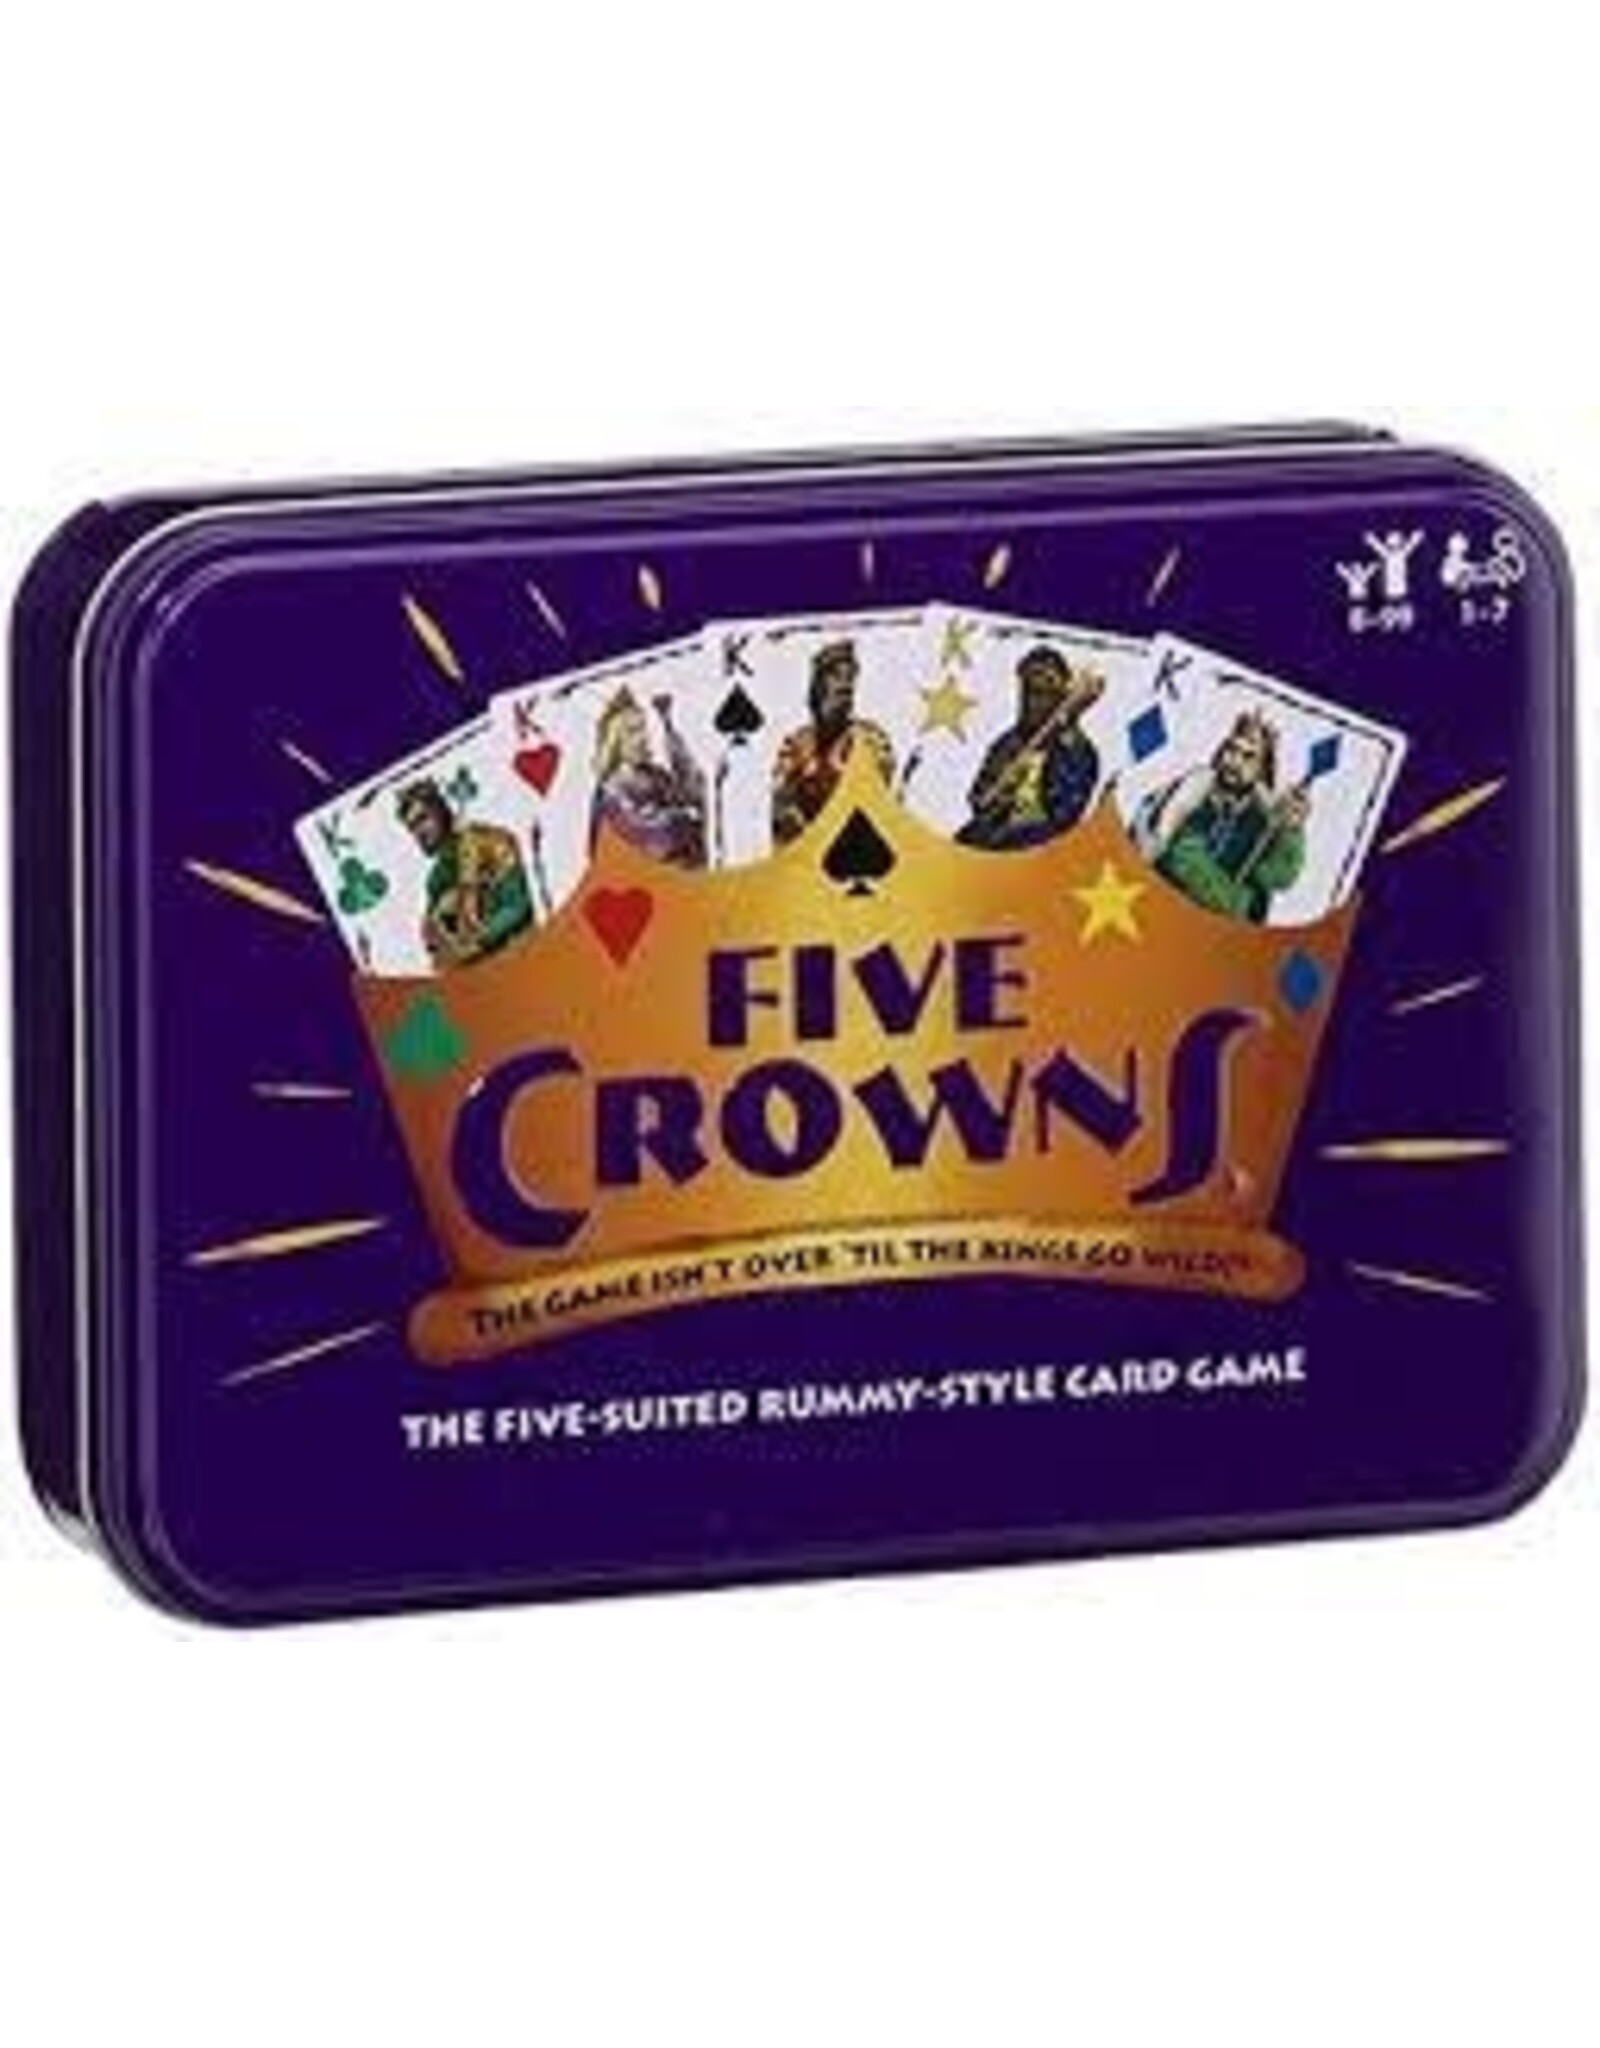 Five Crowns Tin